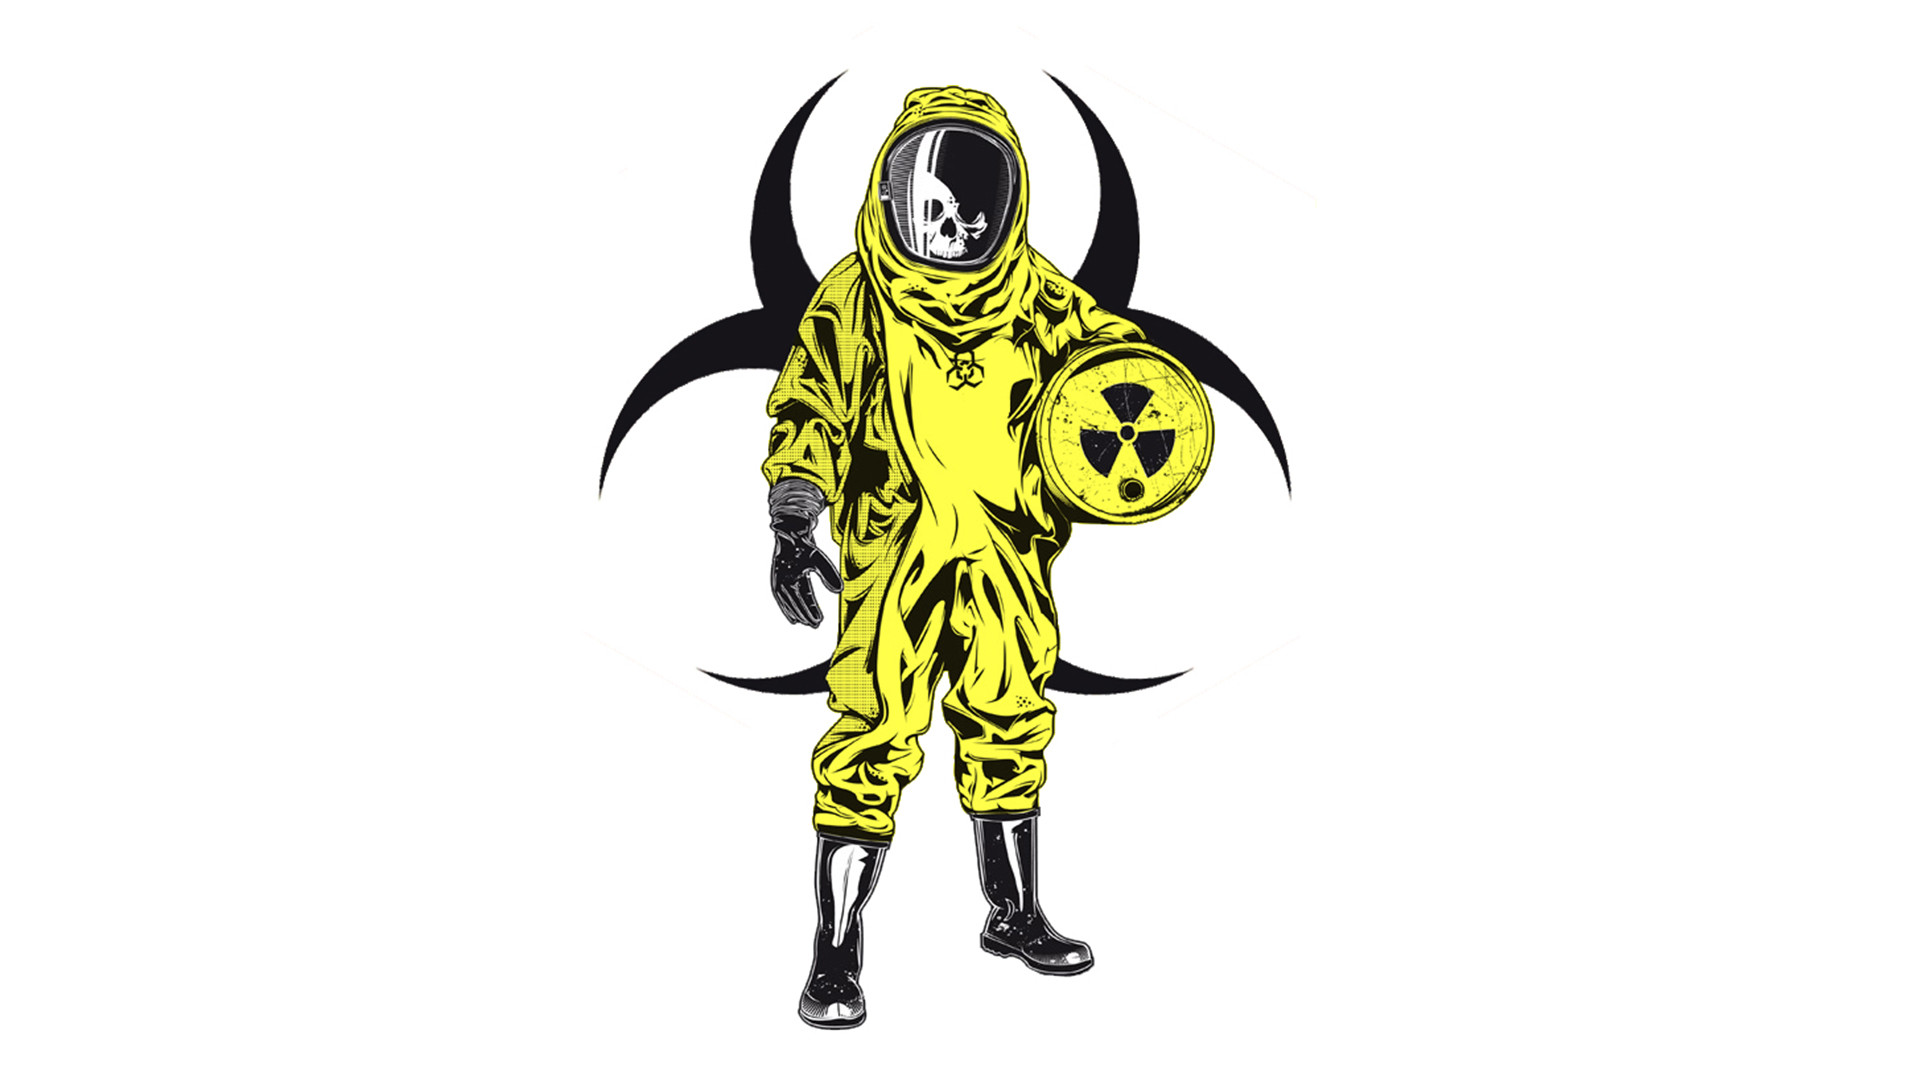 General 1920x1080 nuclear biohazard skull simple background digital art